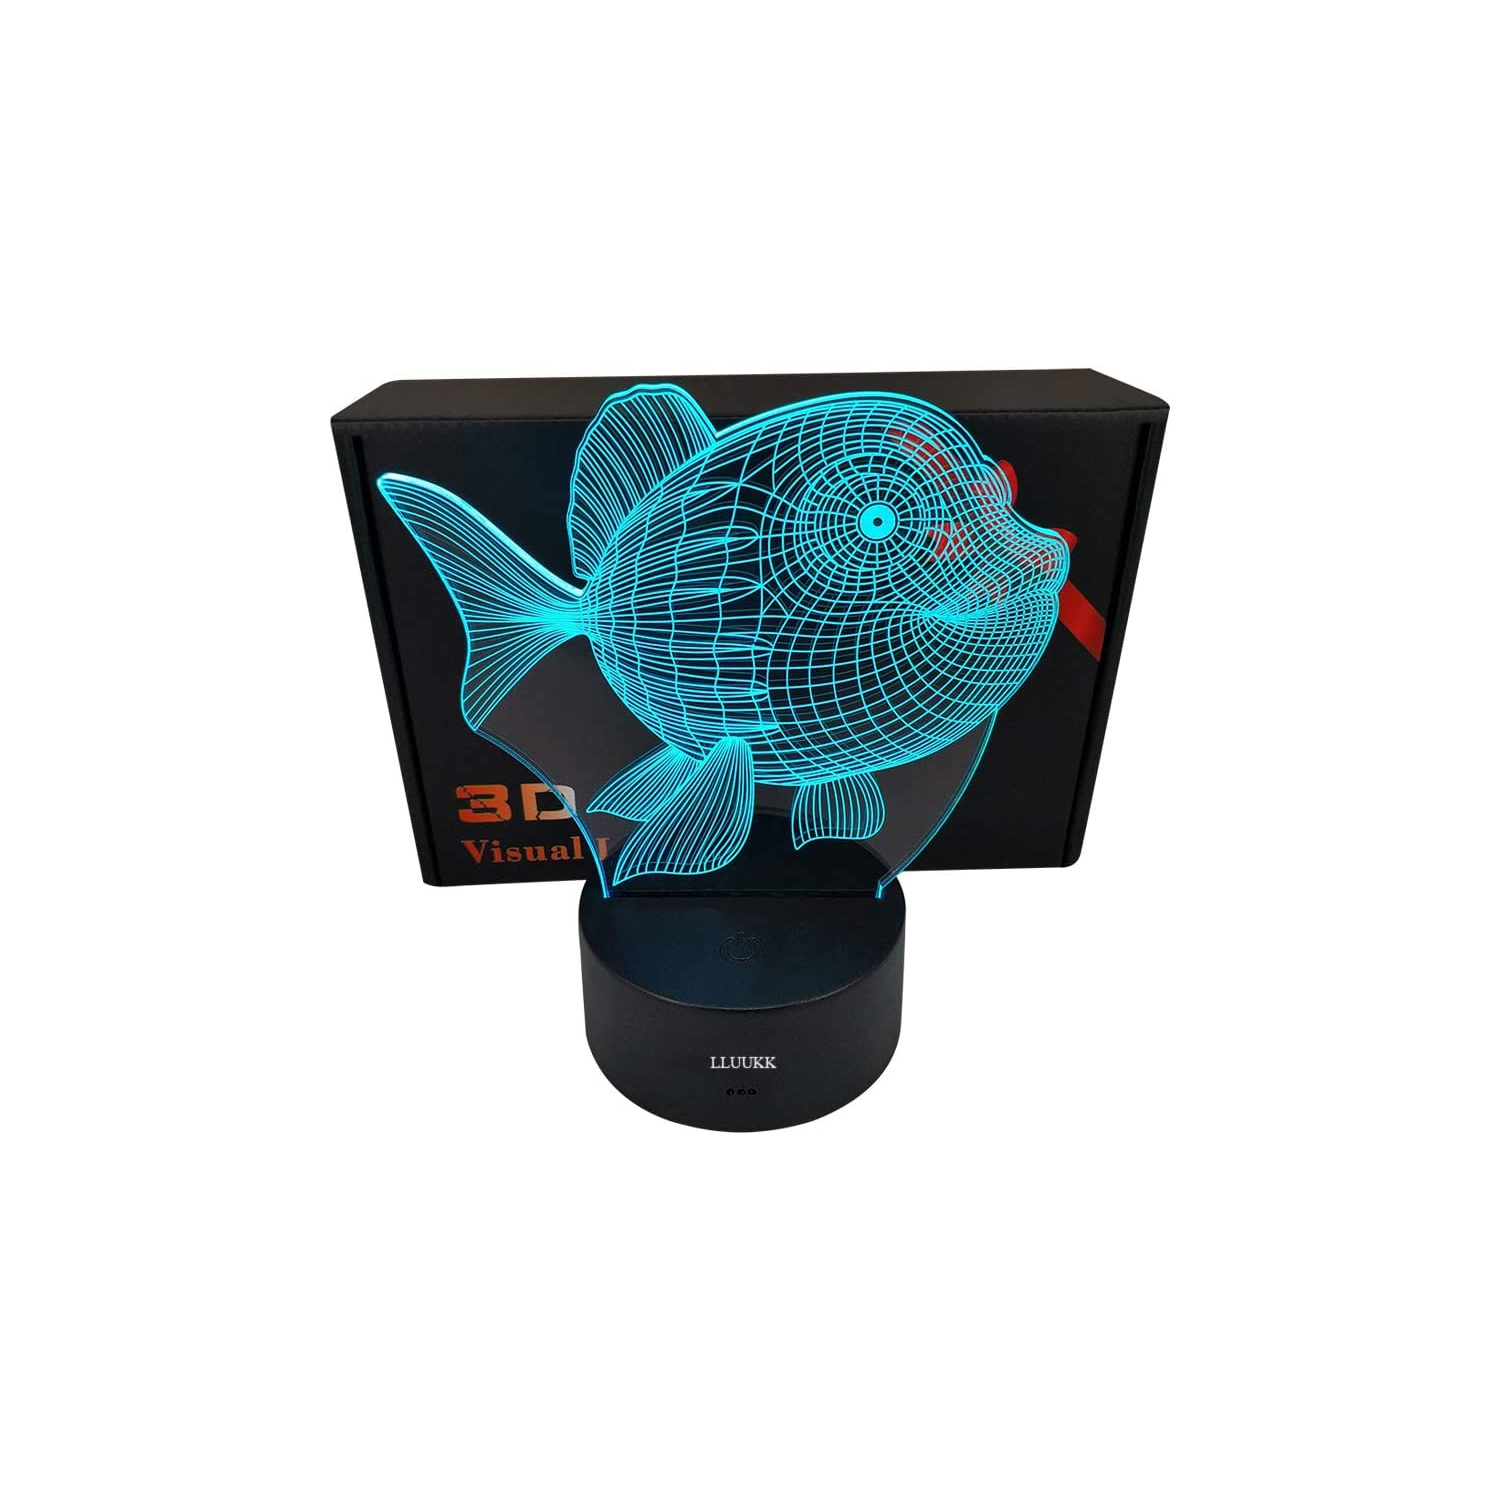 LLUUKK Visual 3D Night light Lamp Clownfish Fish Sea animal toys Desk Lamp Table decoration household accessories Kids gift b